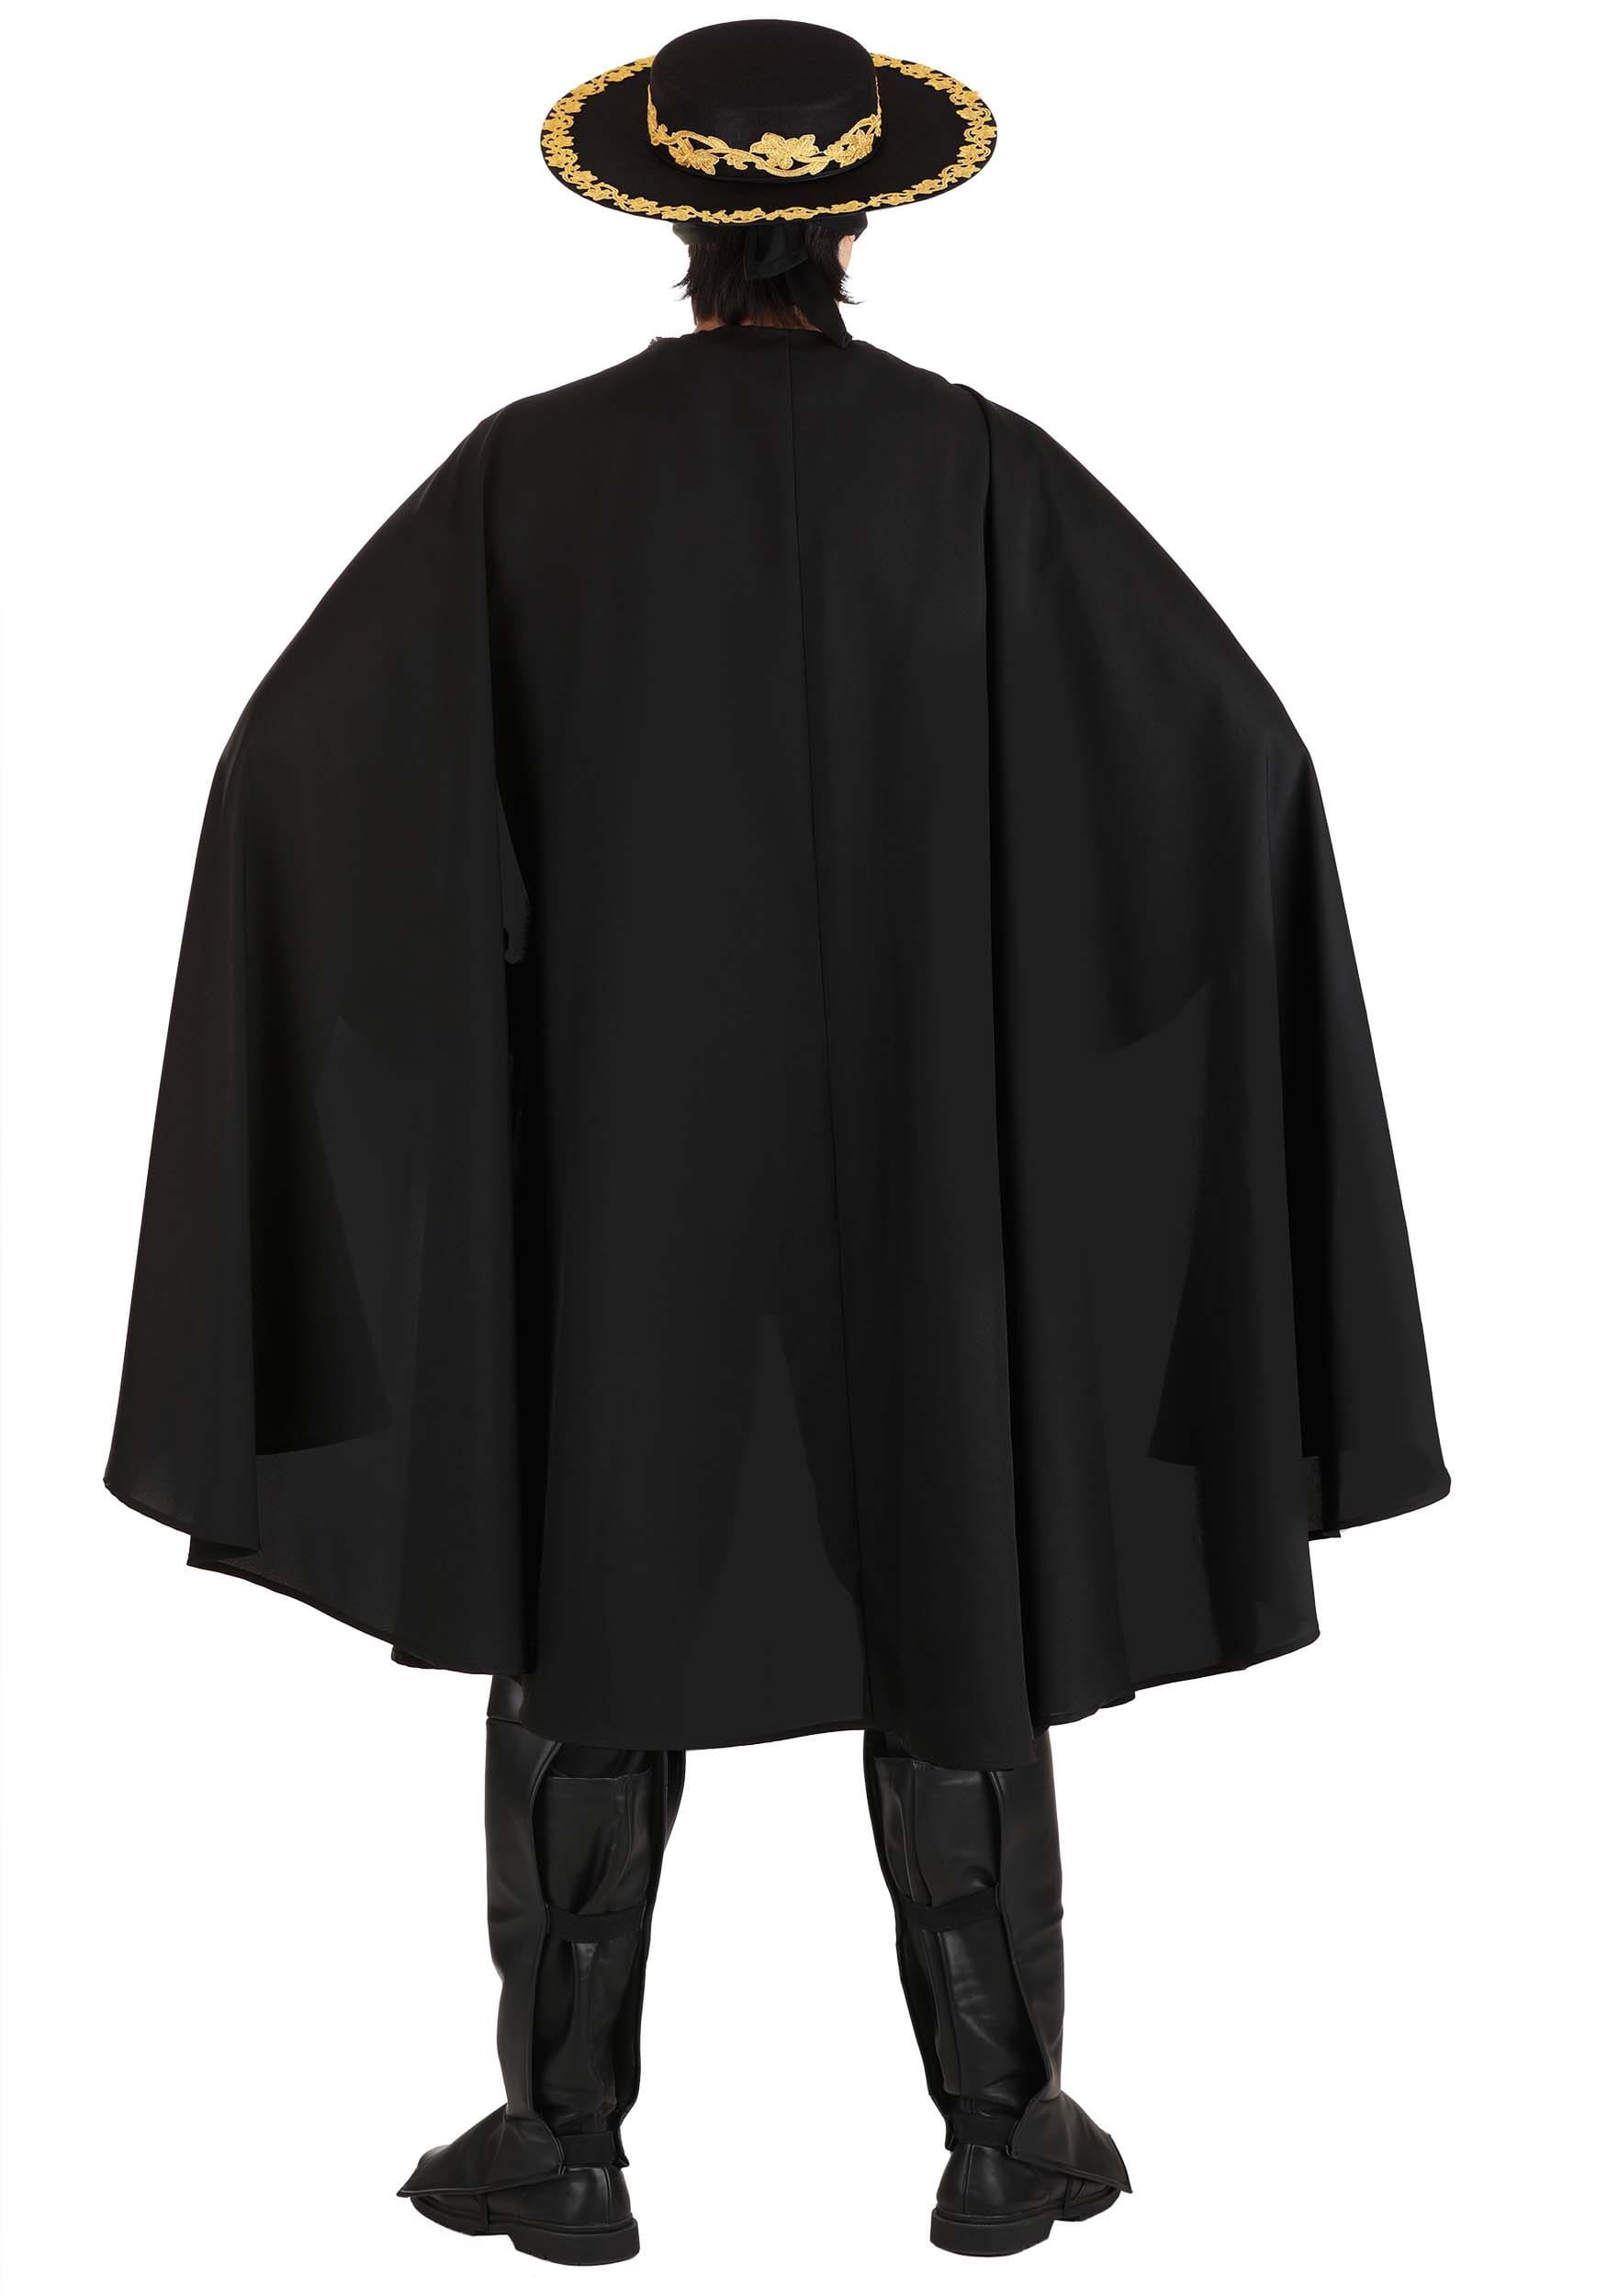 Zorro Costume / Masked Bandit / Deluxe